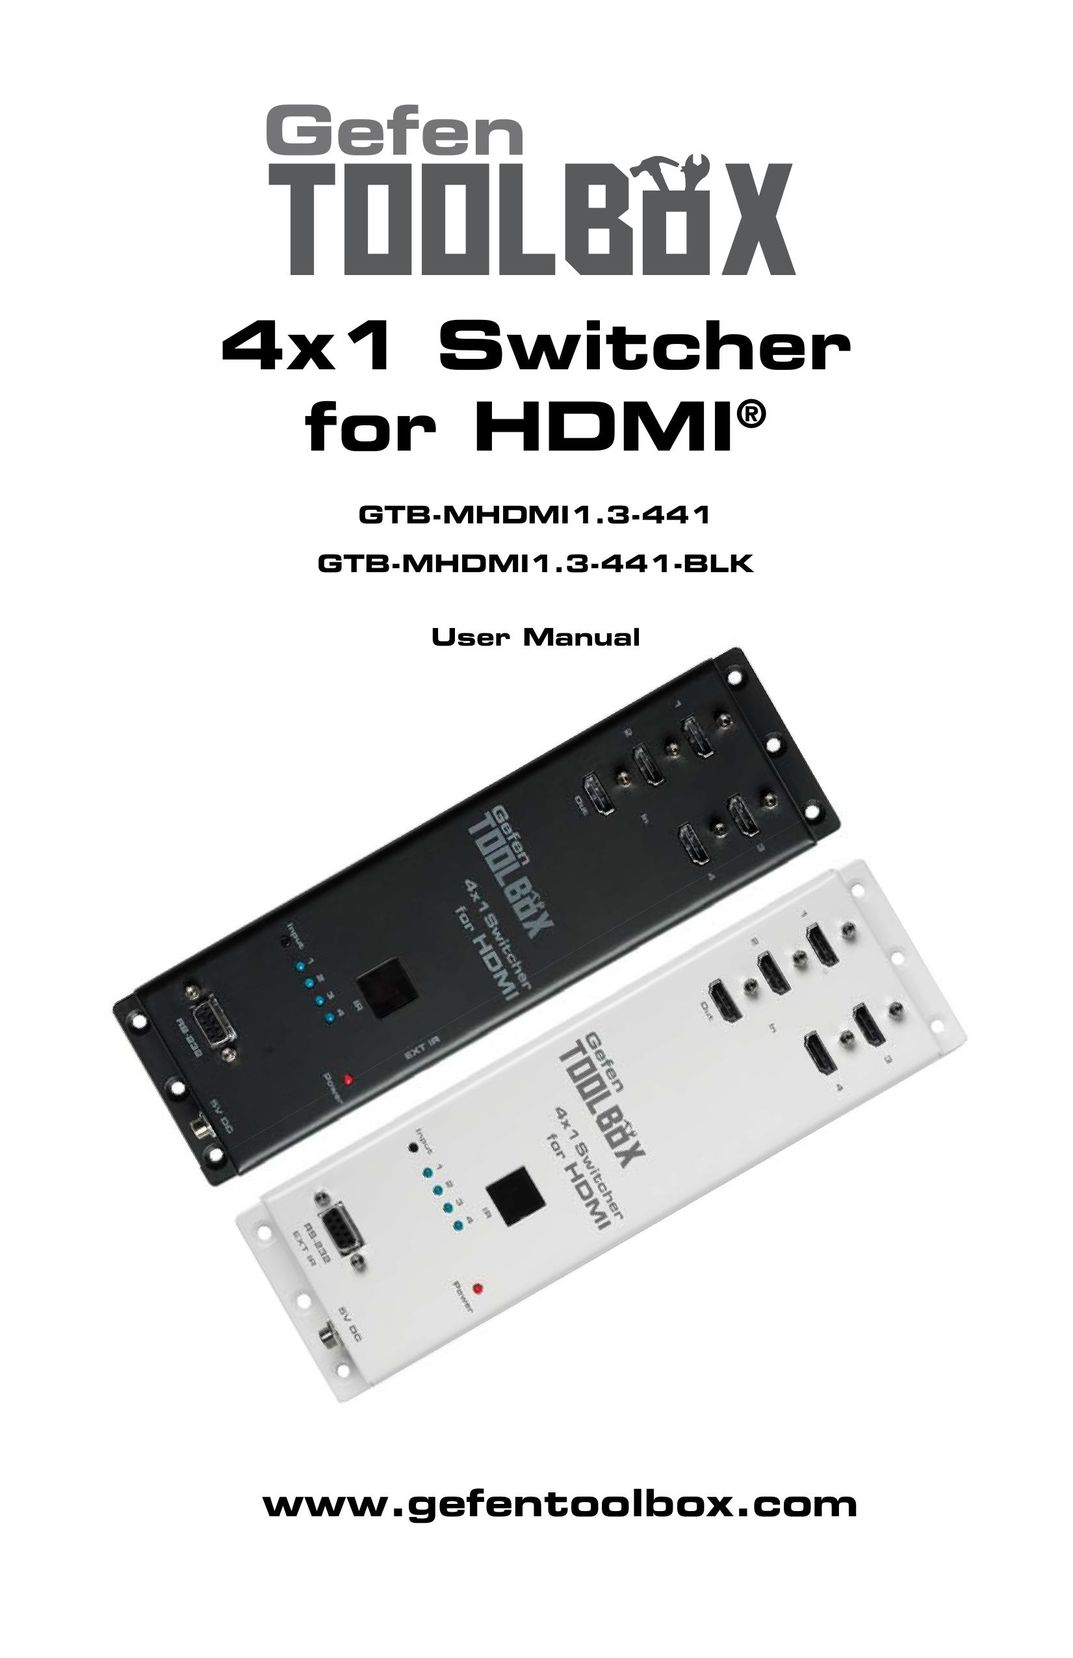 Gefen GTB-MHDMI1.3-441 Switch User Manual